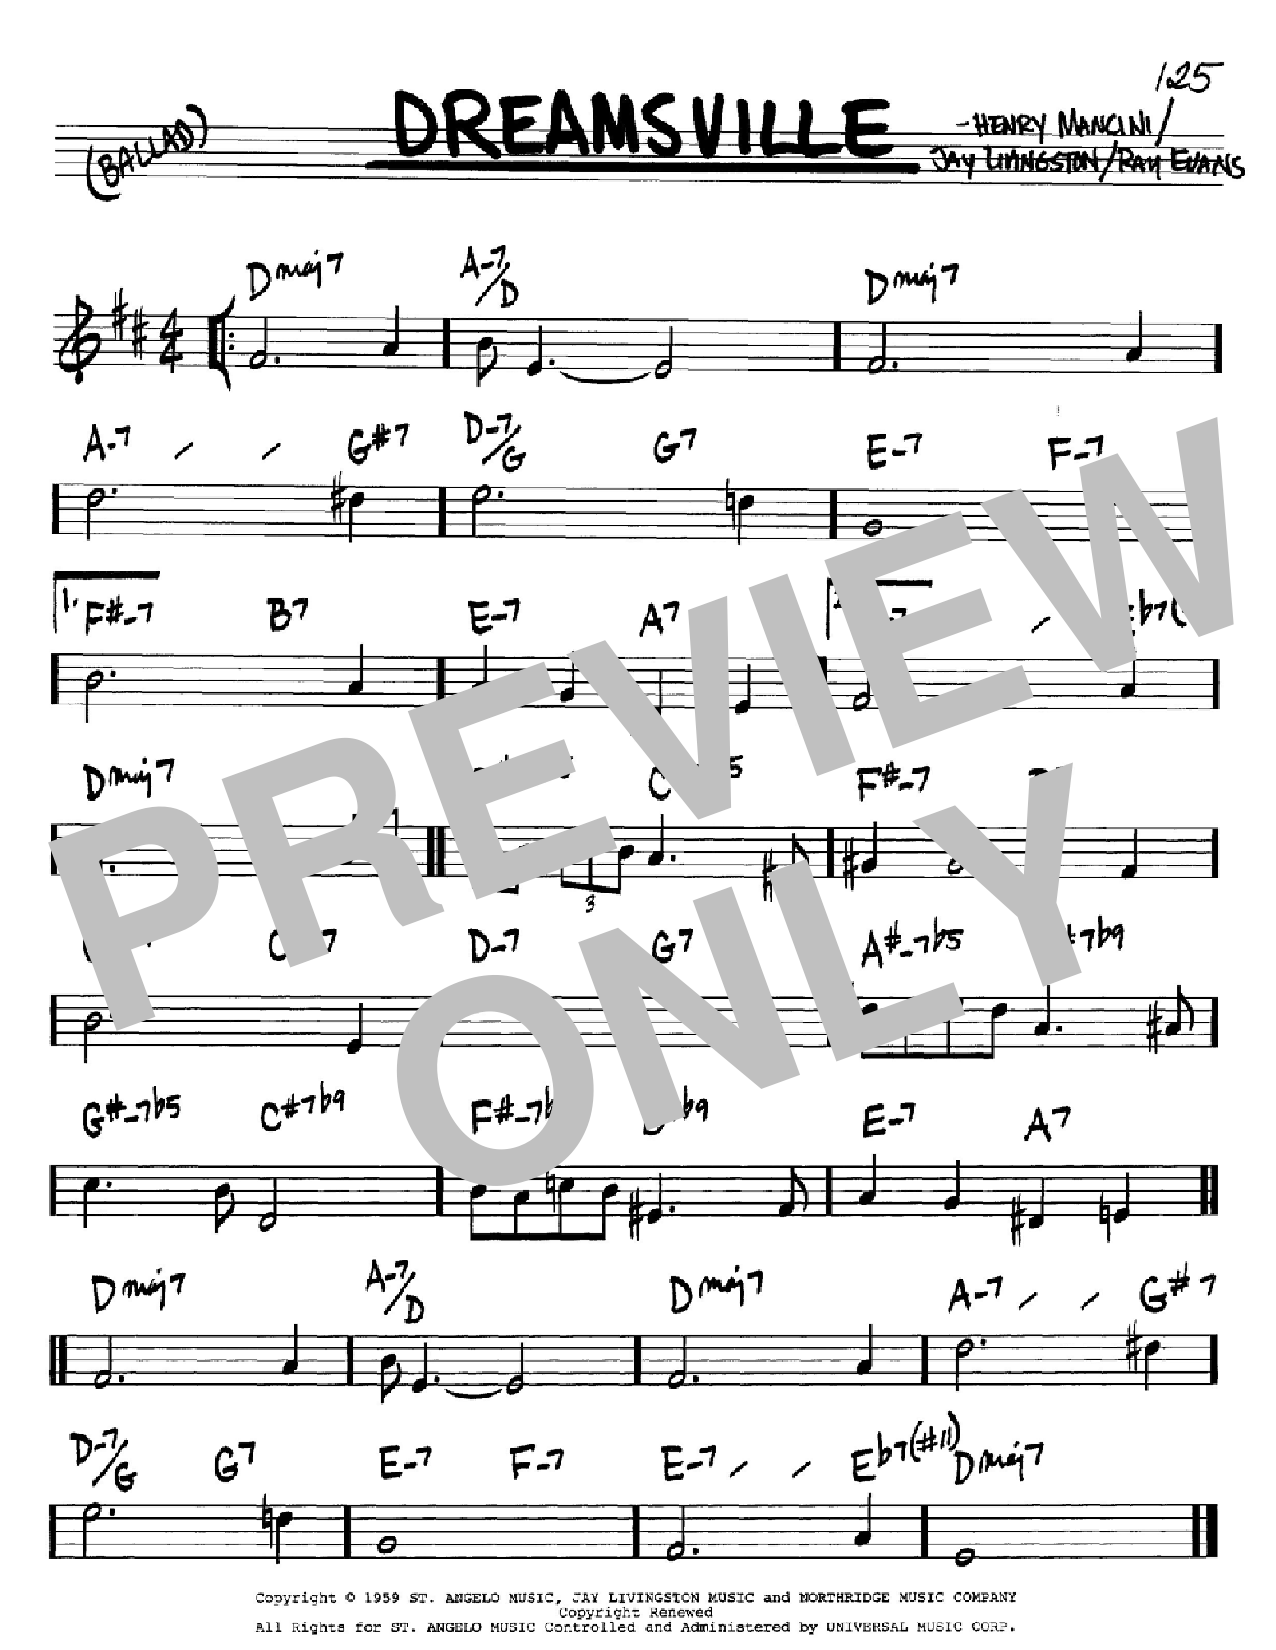 Download Henry Mancini Dreamsville Sheet Music